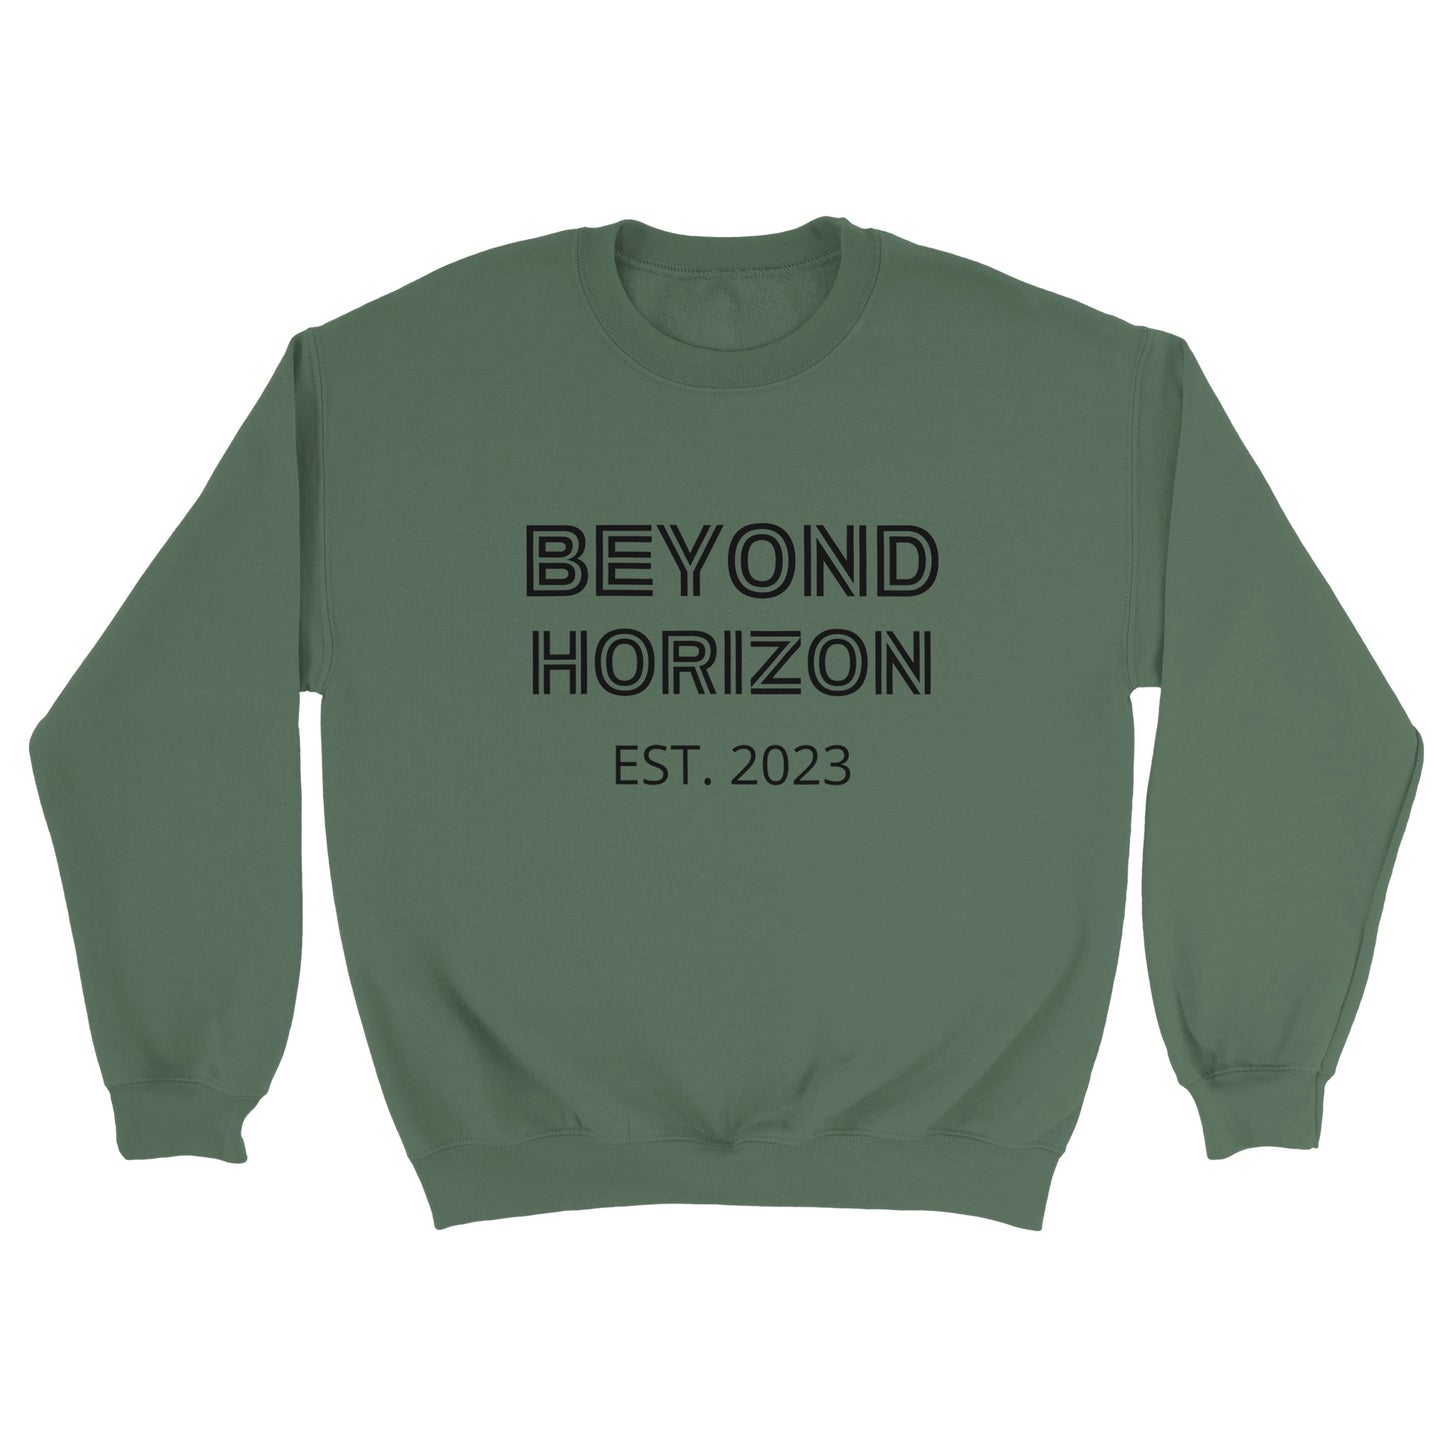 Beyond Horizon EST. 2023 Crewneck